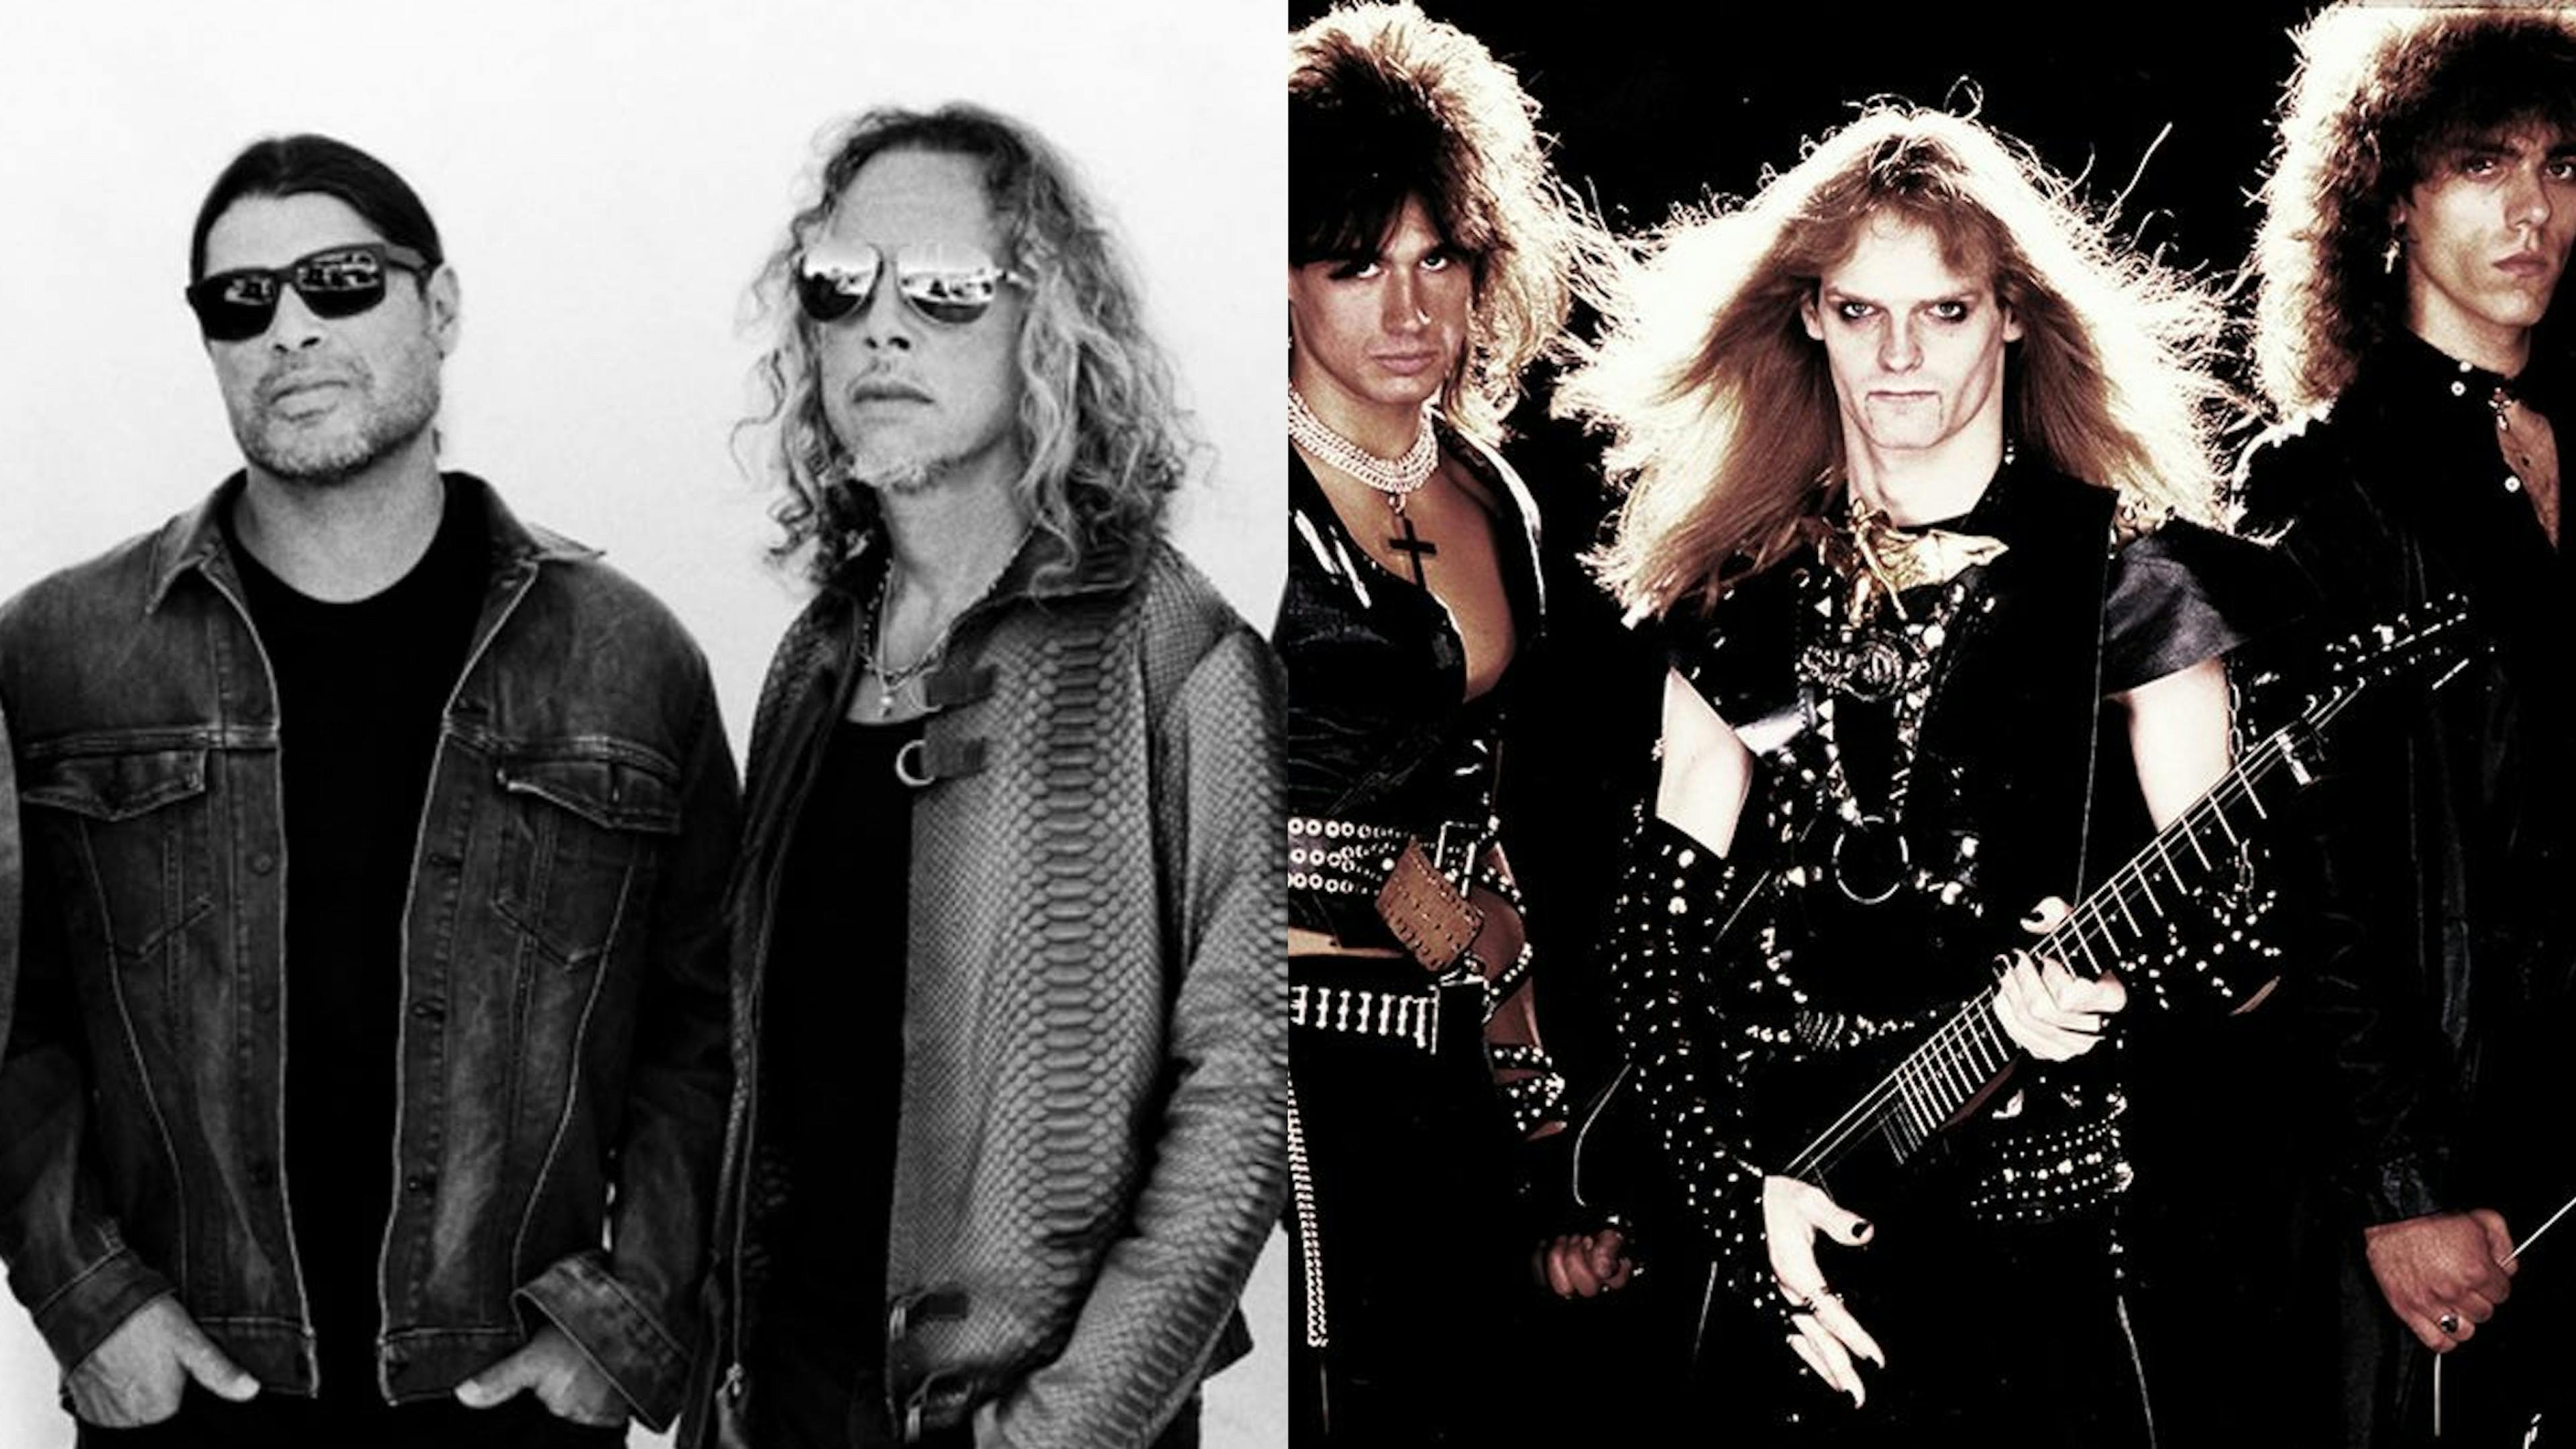 Watch Metallica's Kirk Hammett And Robert Trujillo Cover Celtic Frost Live